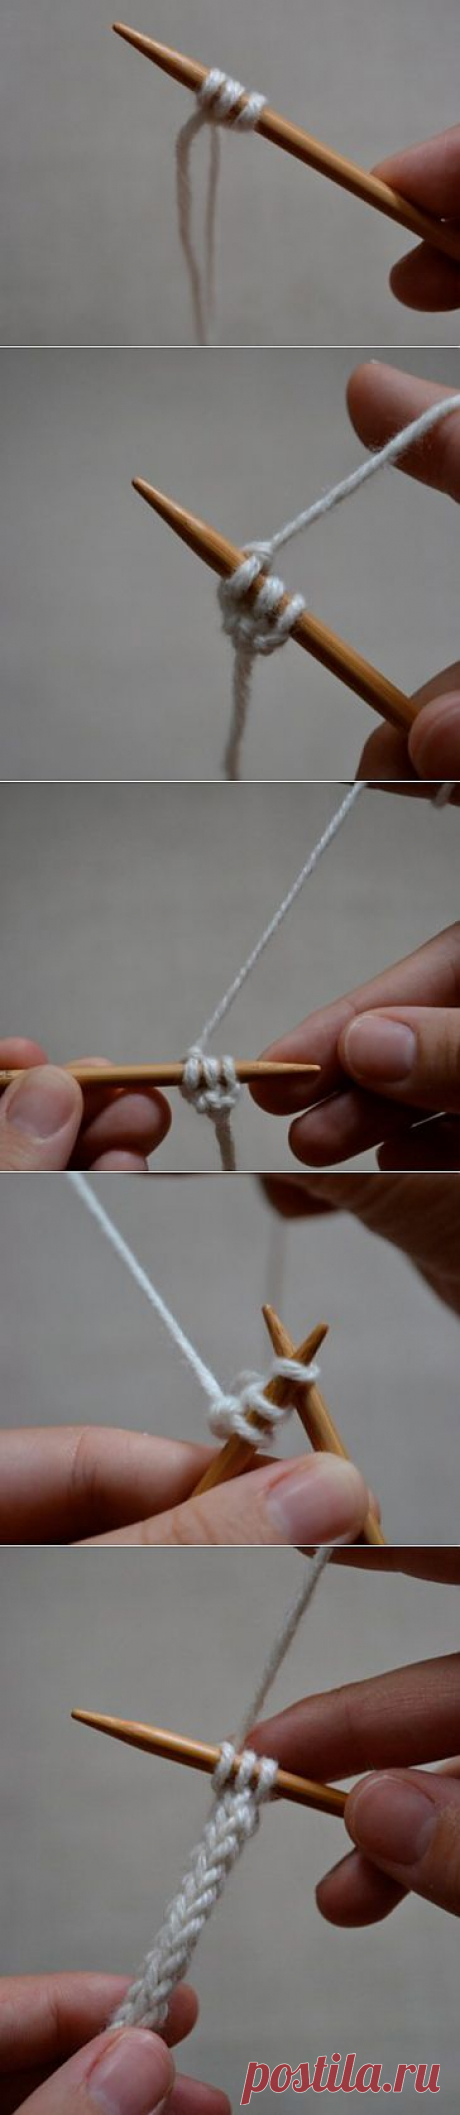 Как вязать шнур спицами | Knity.ru